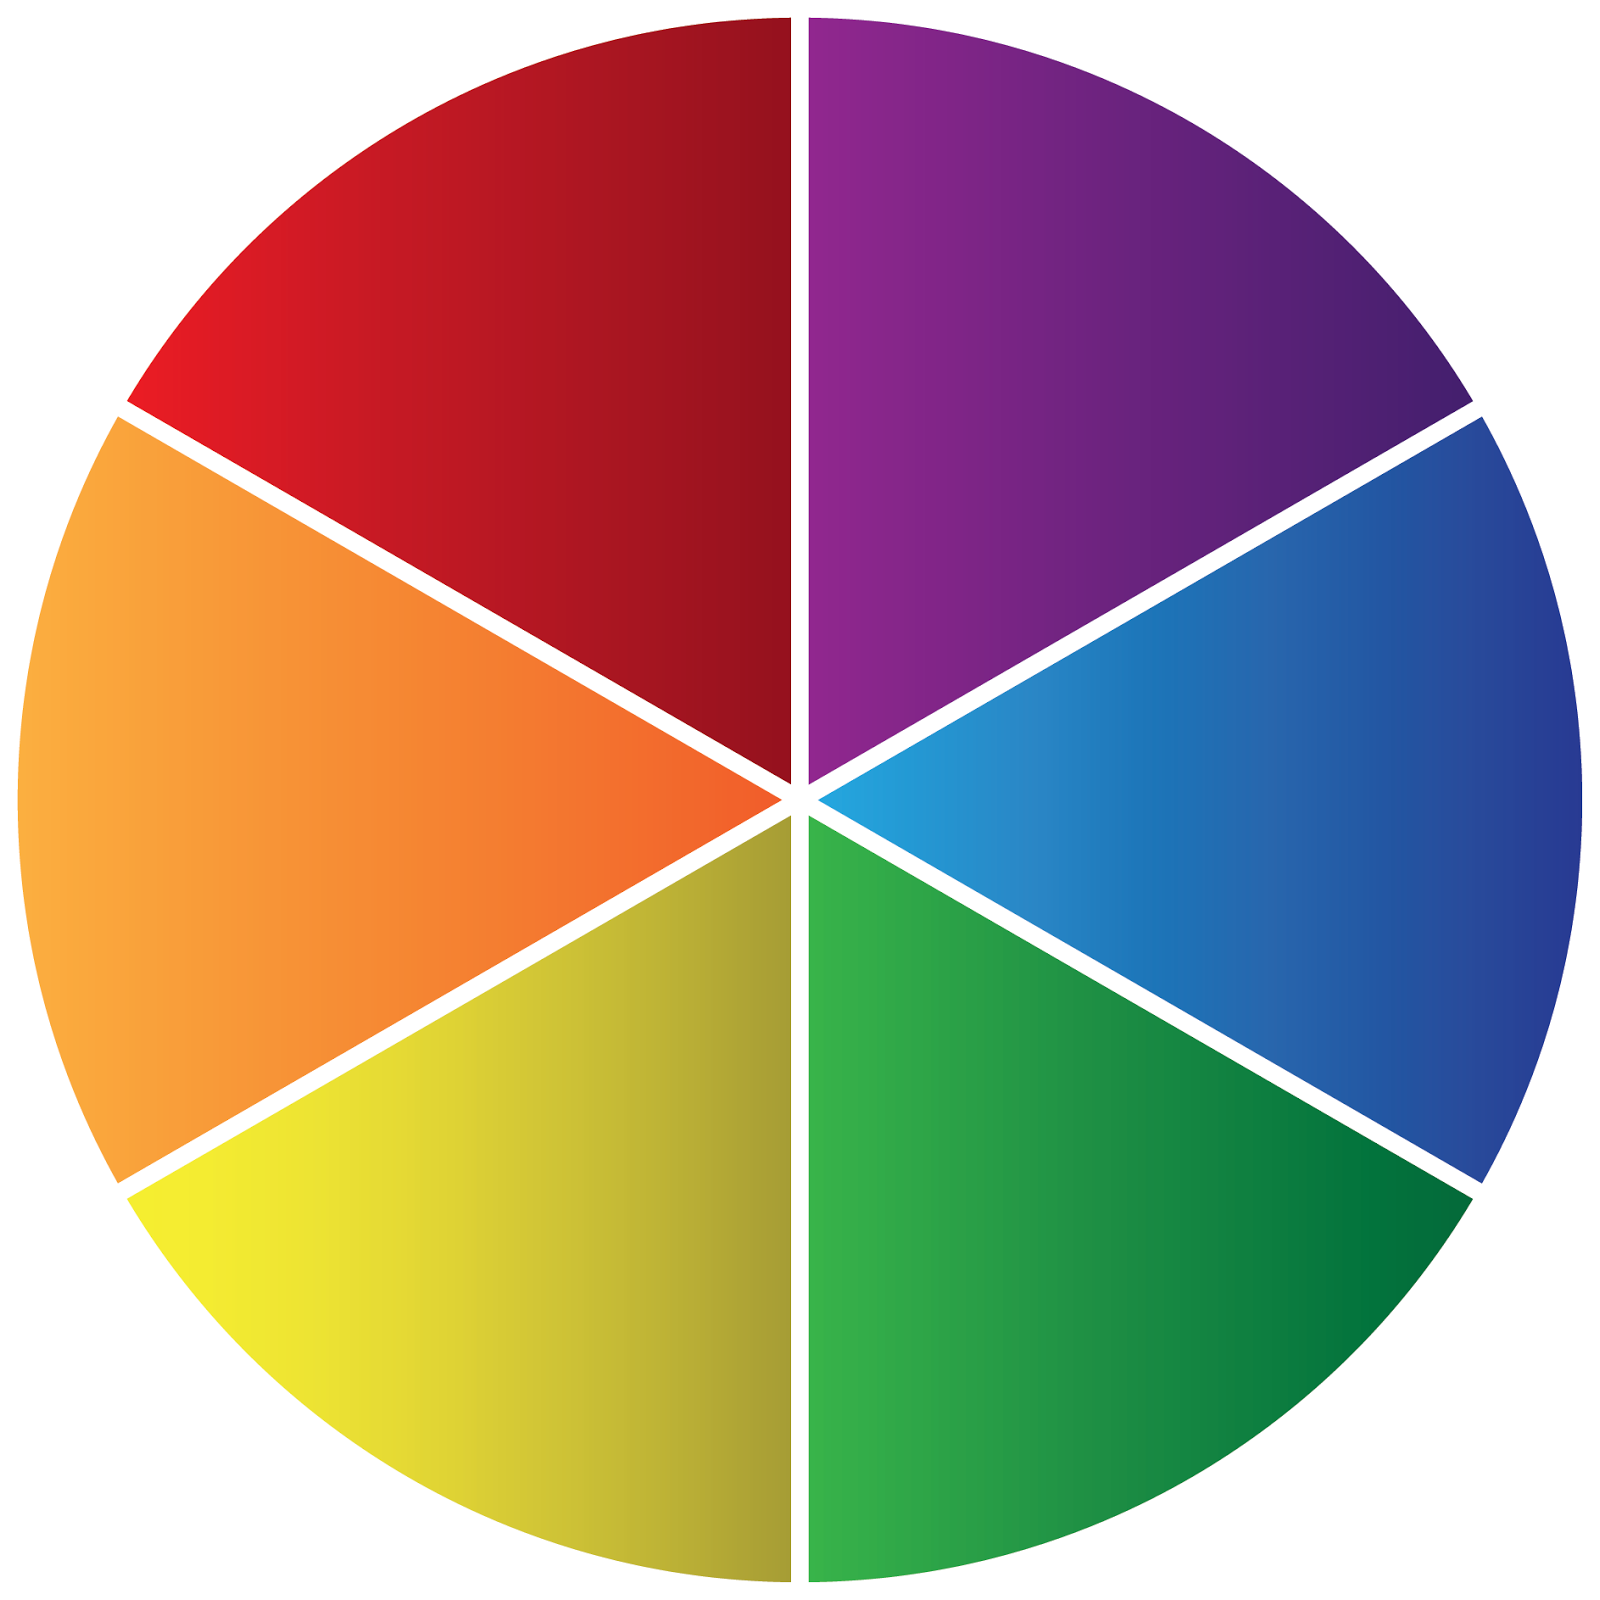 byRedwood: How To Choose a Color Scheme